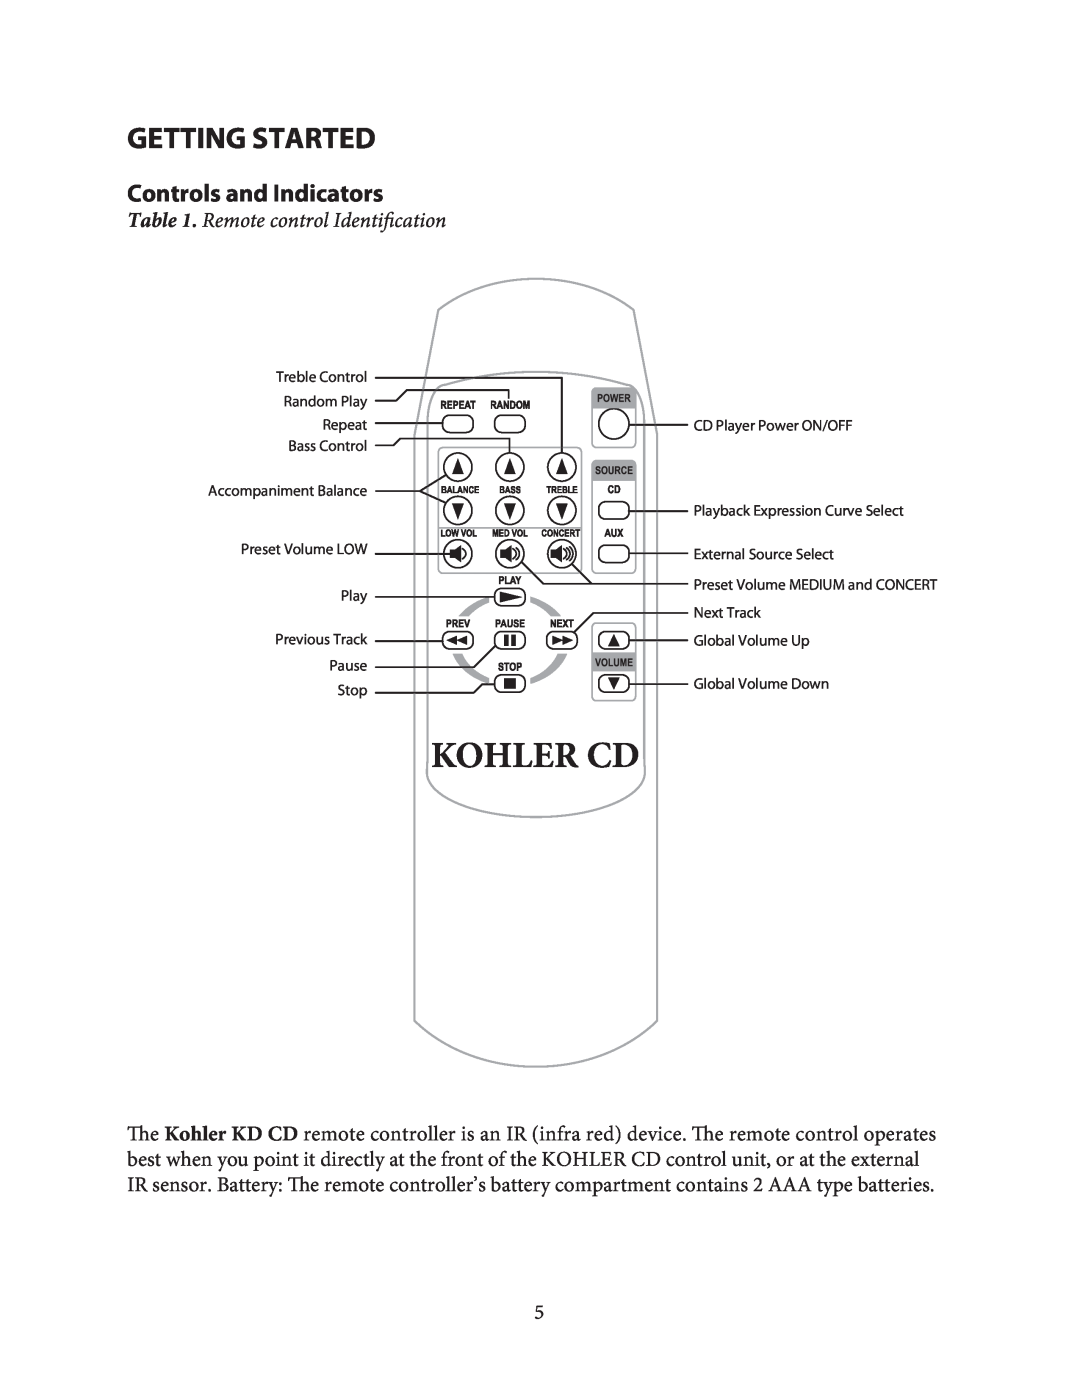 Kohler KD165 manual Getting Started, Controls and Indicators, Remote control Identiﬁcation, Kohler Cd 